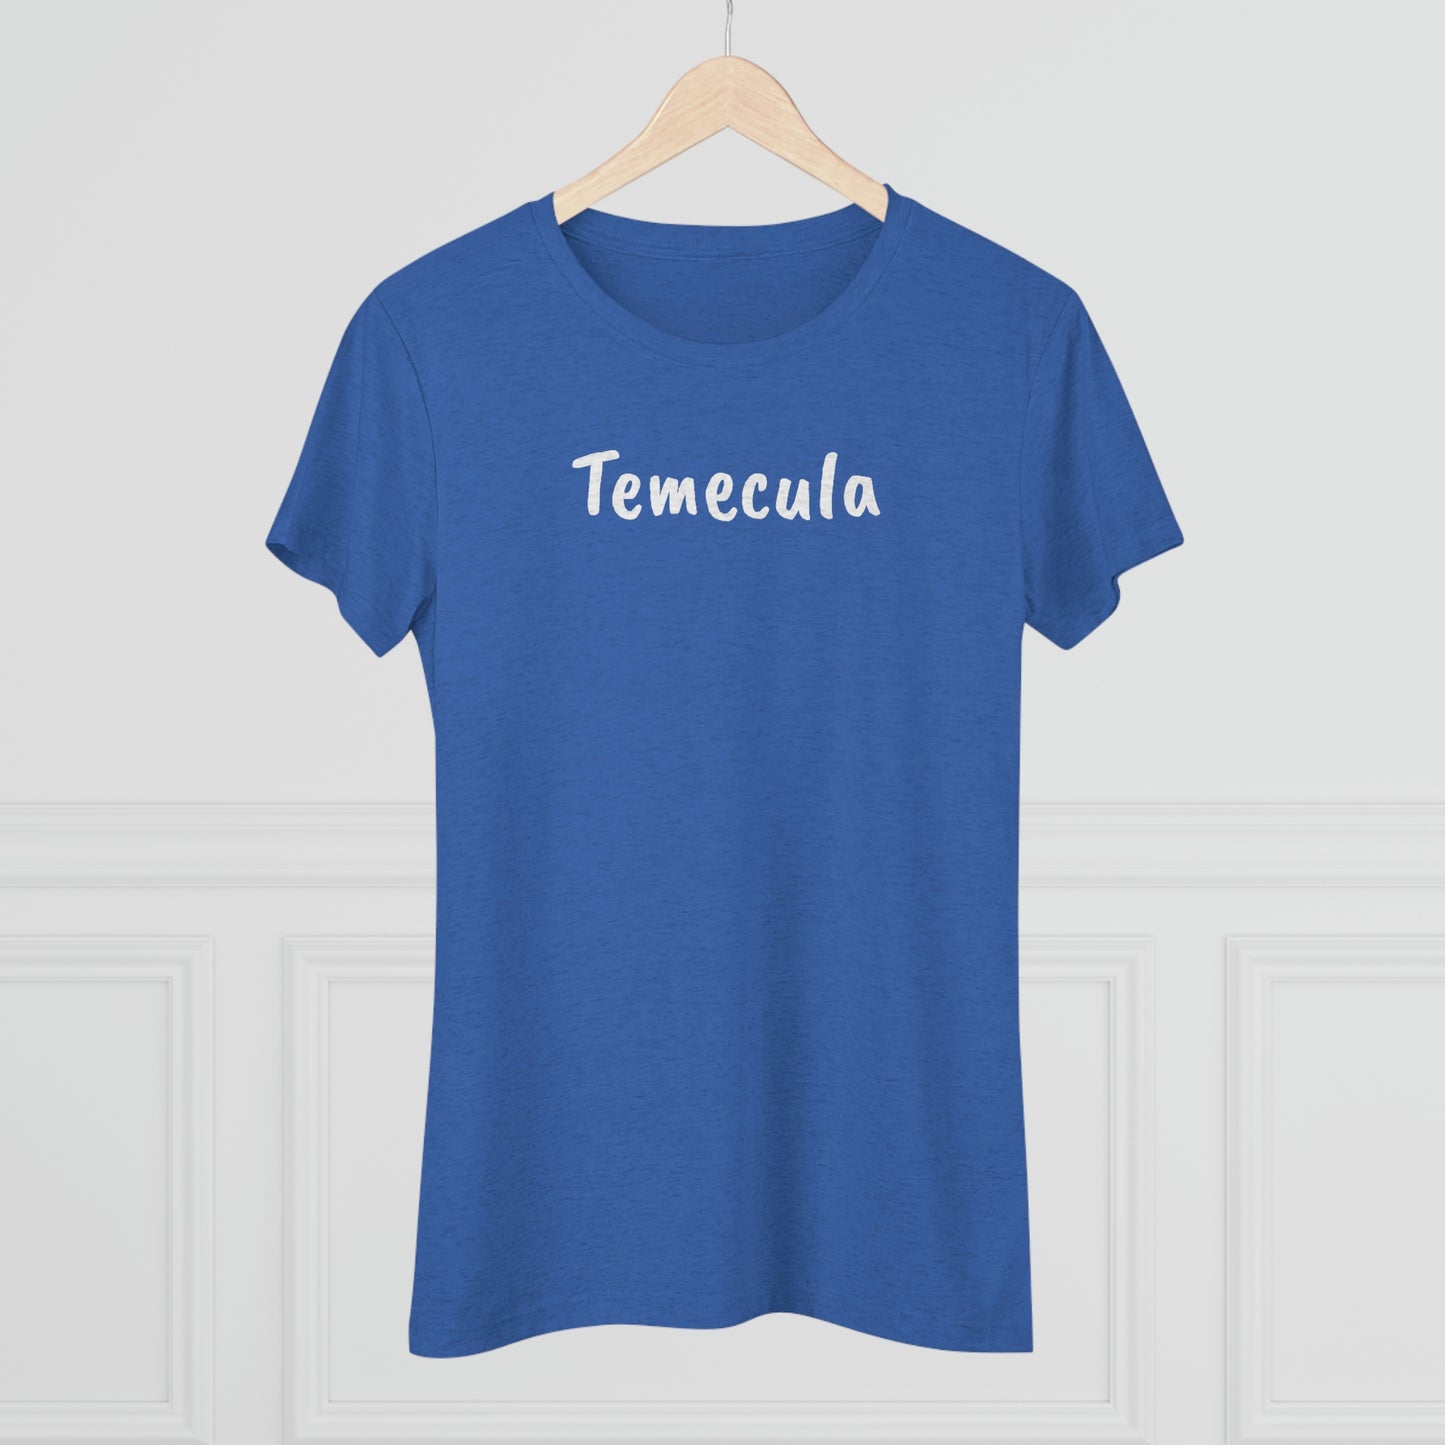 Hummingbird Lady Temecula Women's fitted Triblend Tee  tee shirt